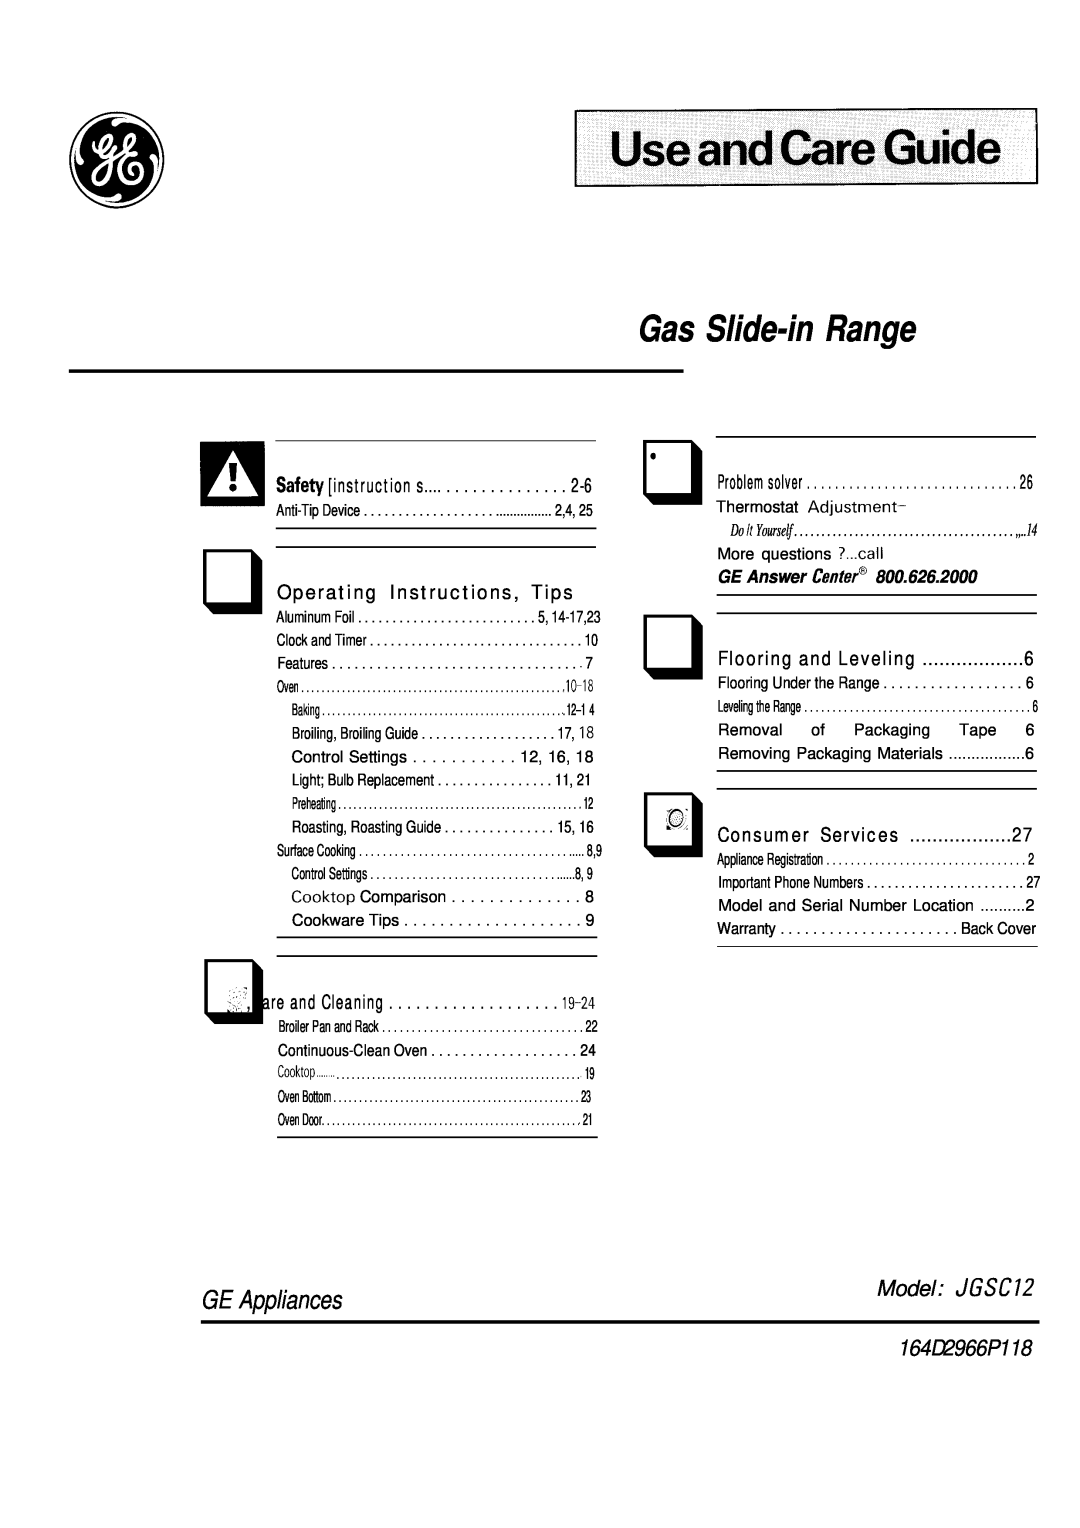 GE 164D2966P118 warranty Gas Slide-inRange, GE Appliances, Model JGSC12, Operating Instructions, Tips, Consumer Services 